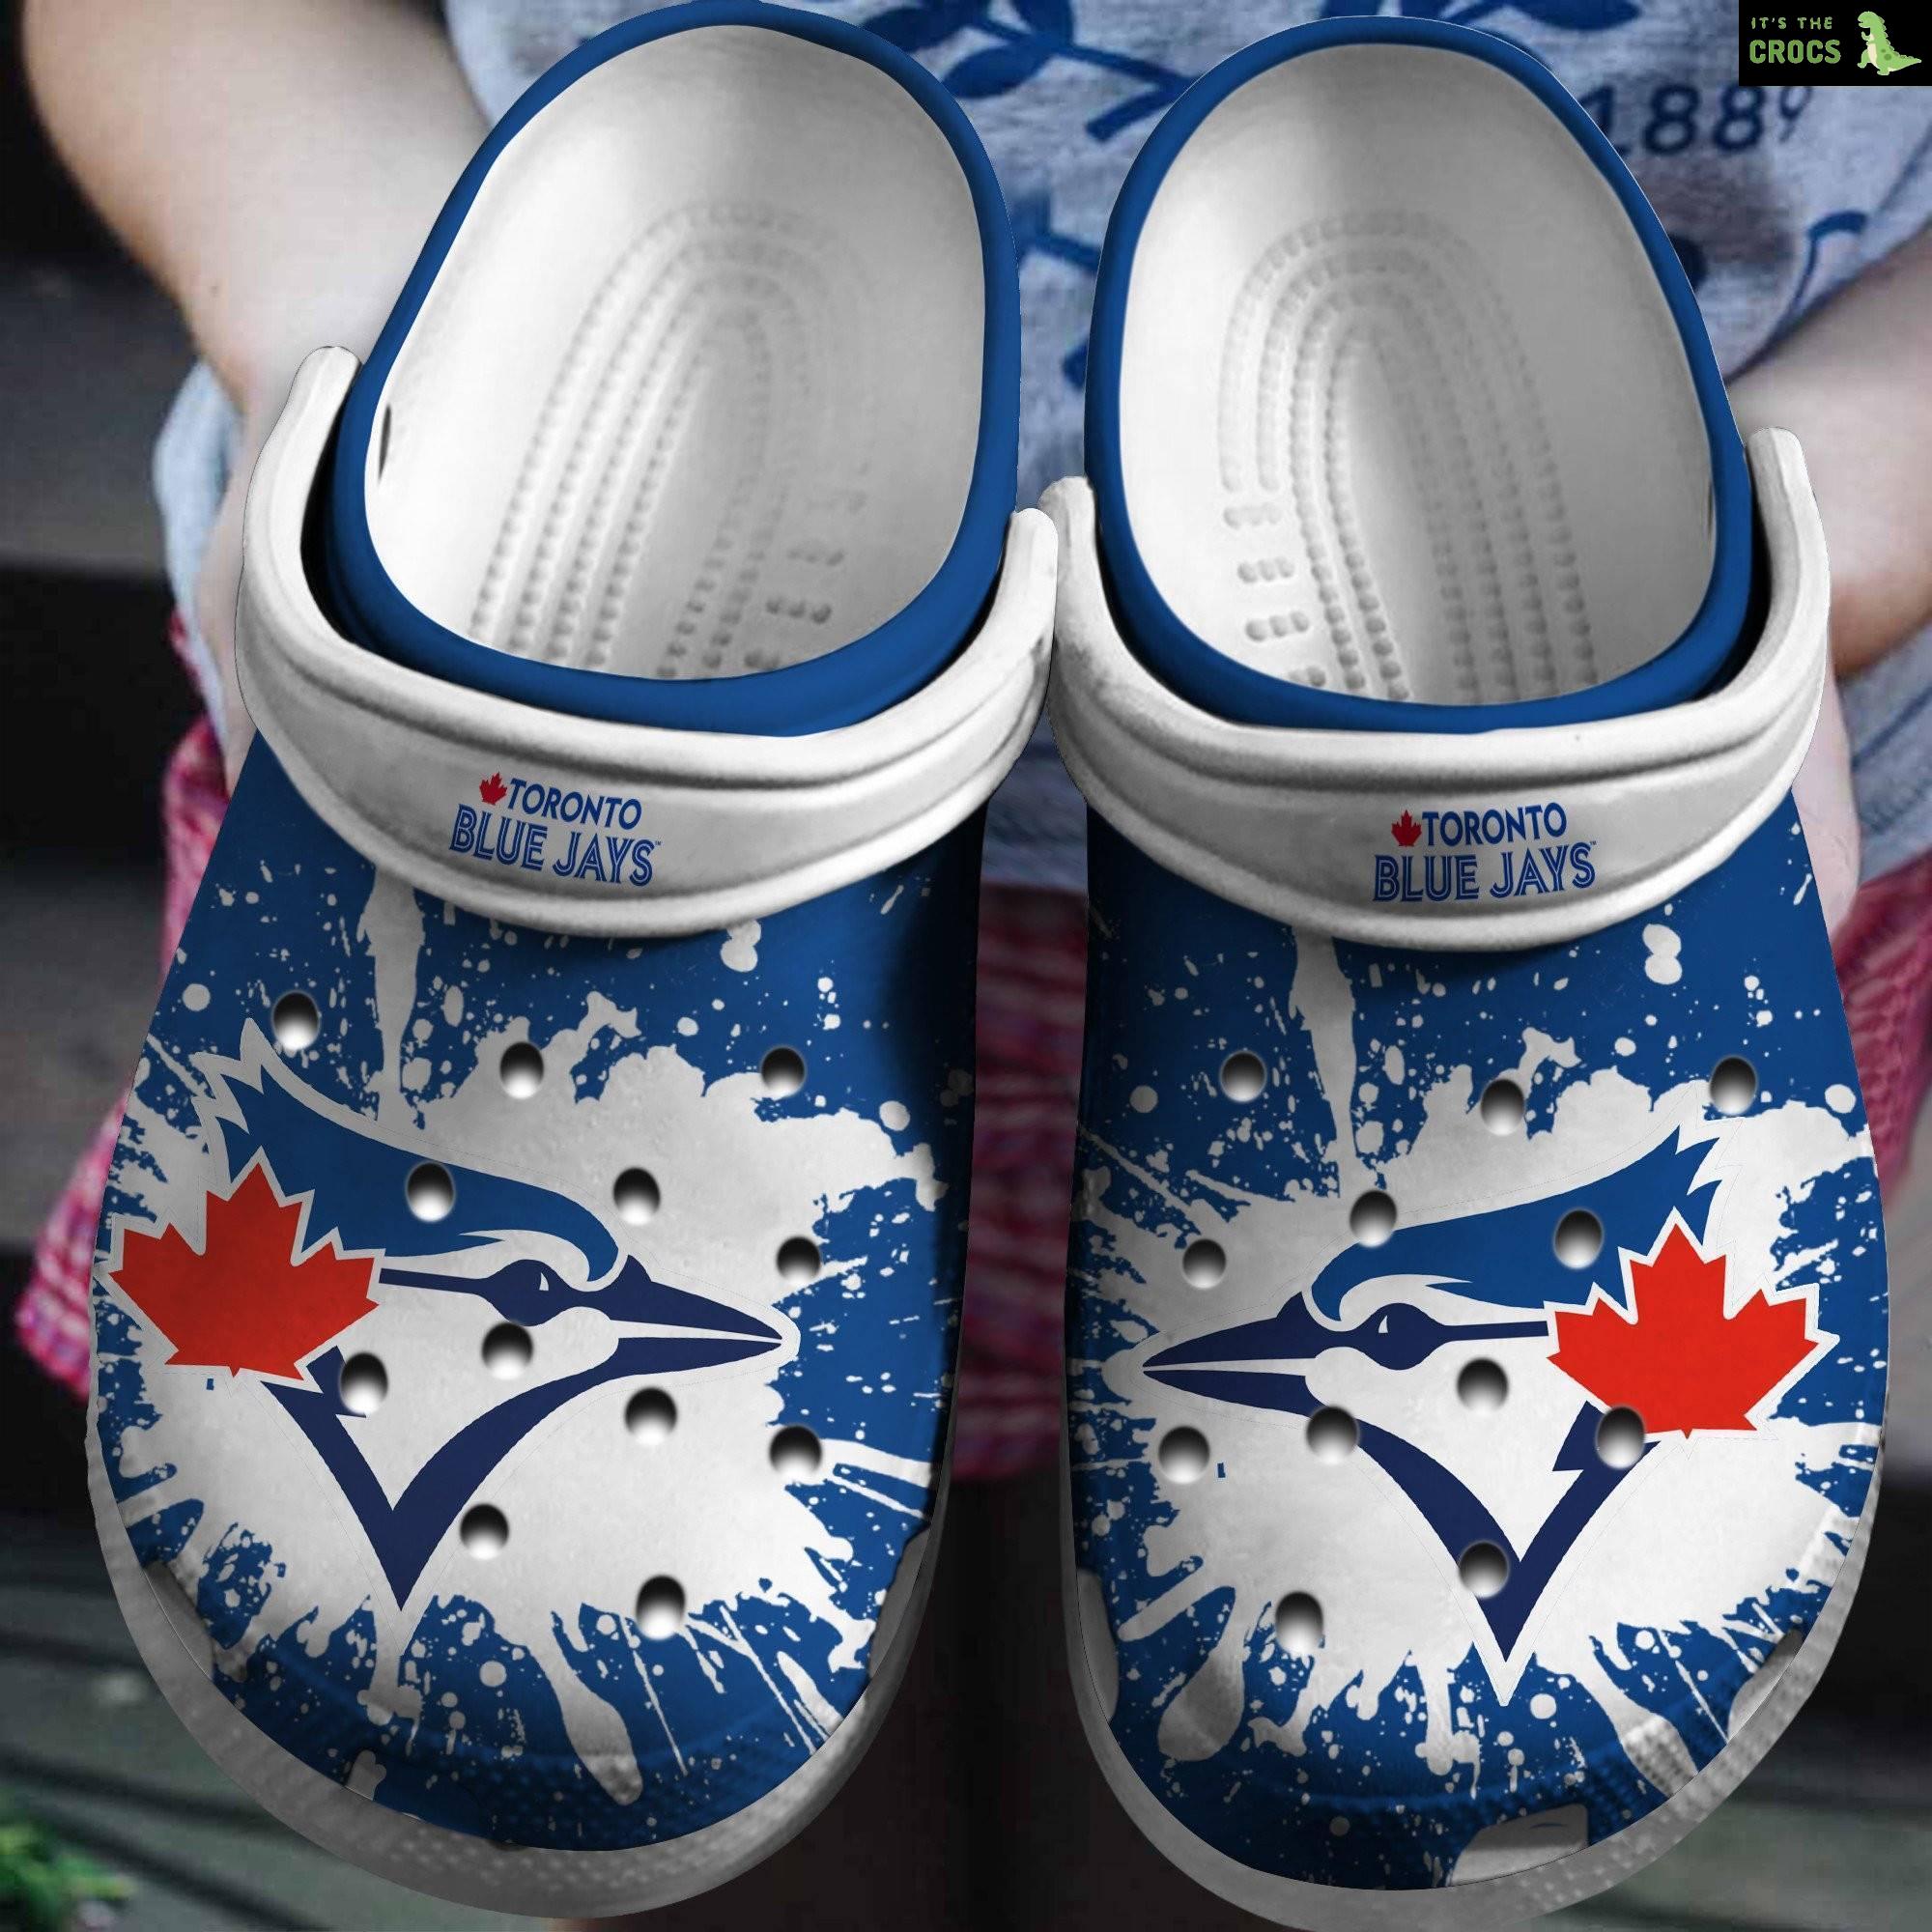 Hot Mlb Team Toronto Blue Jays Blue – White Crocs Clog Shoes